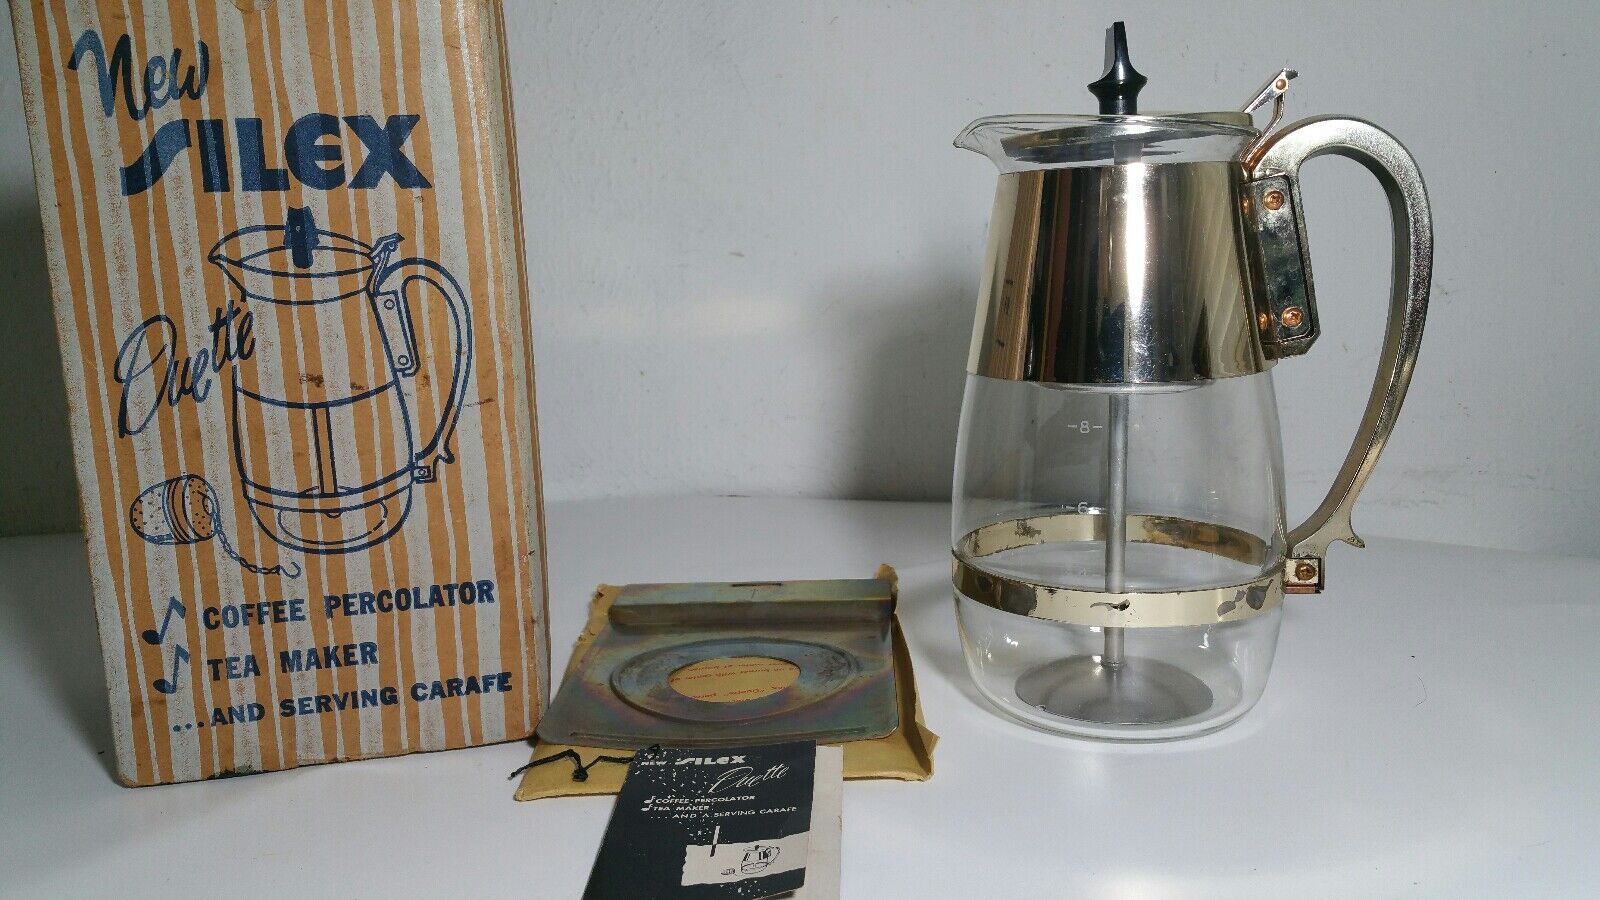 Silex Duette Coffee Percolator Tea Maker Serving Carafe Vintage USA Mid Century